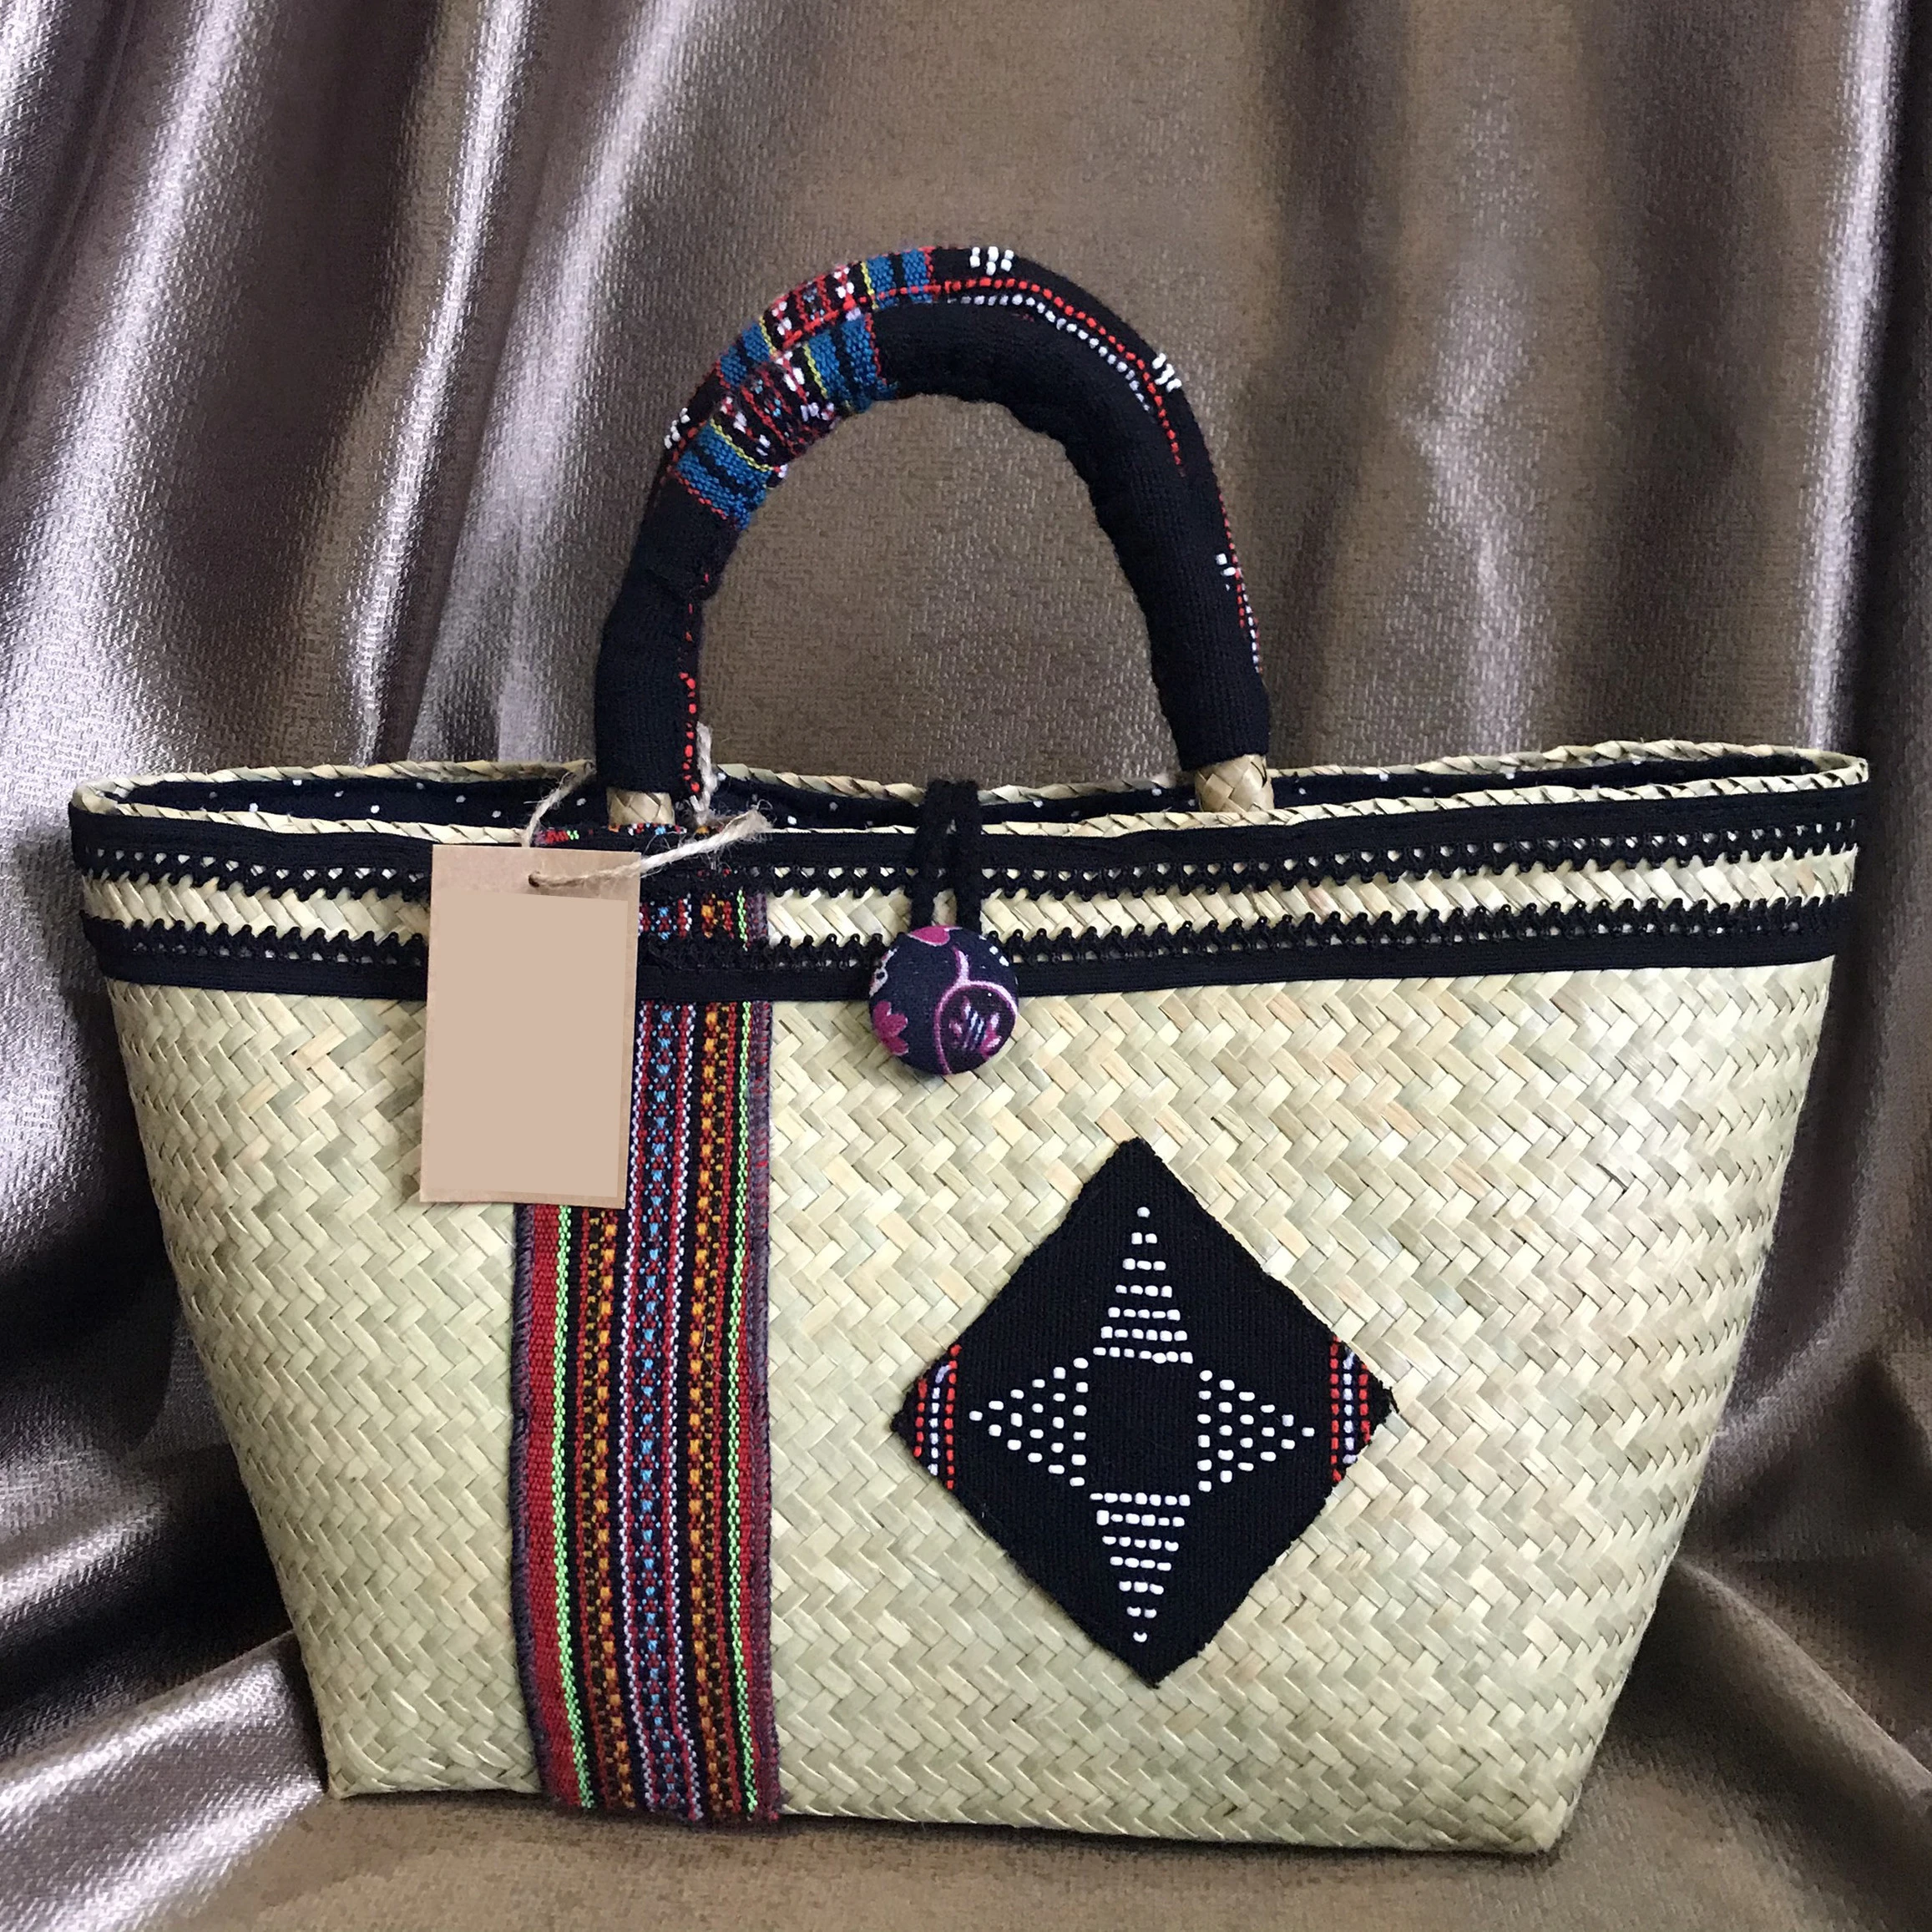 New design sedge handbag on sale 77